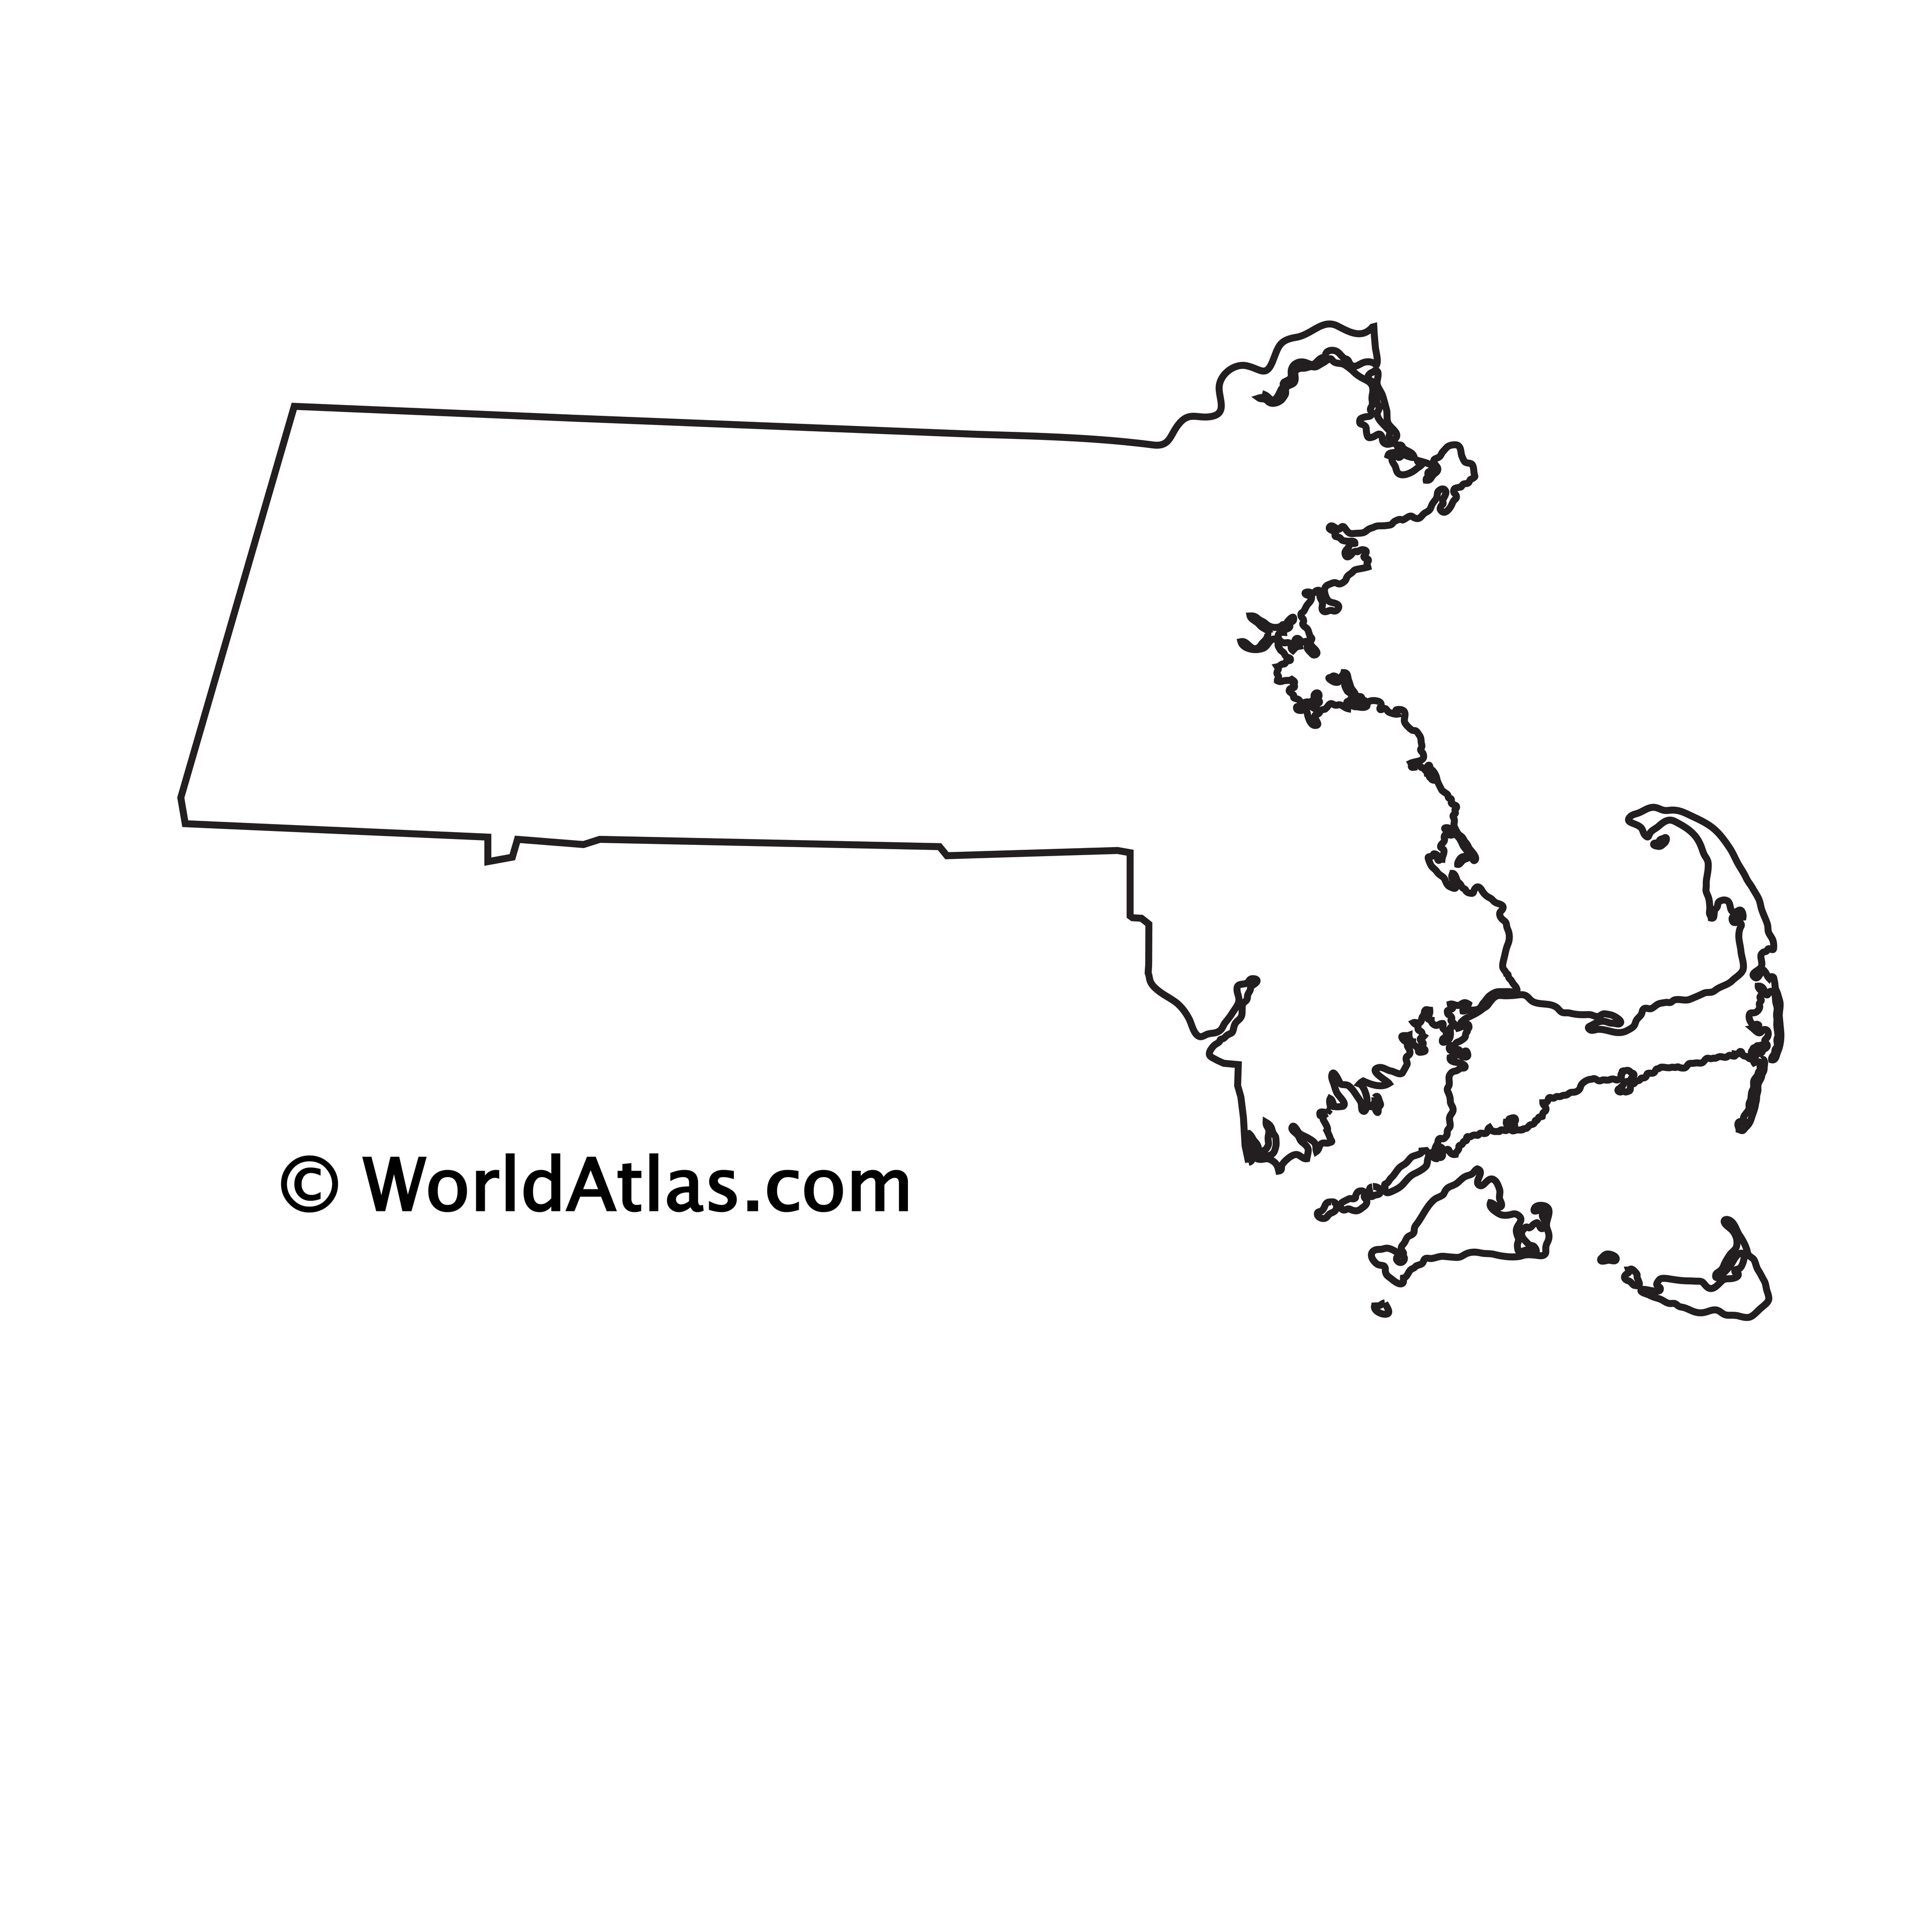 Massachusetts maps facts